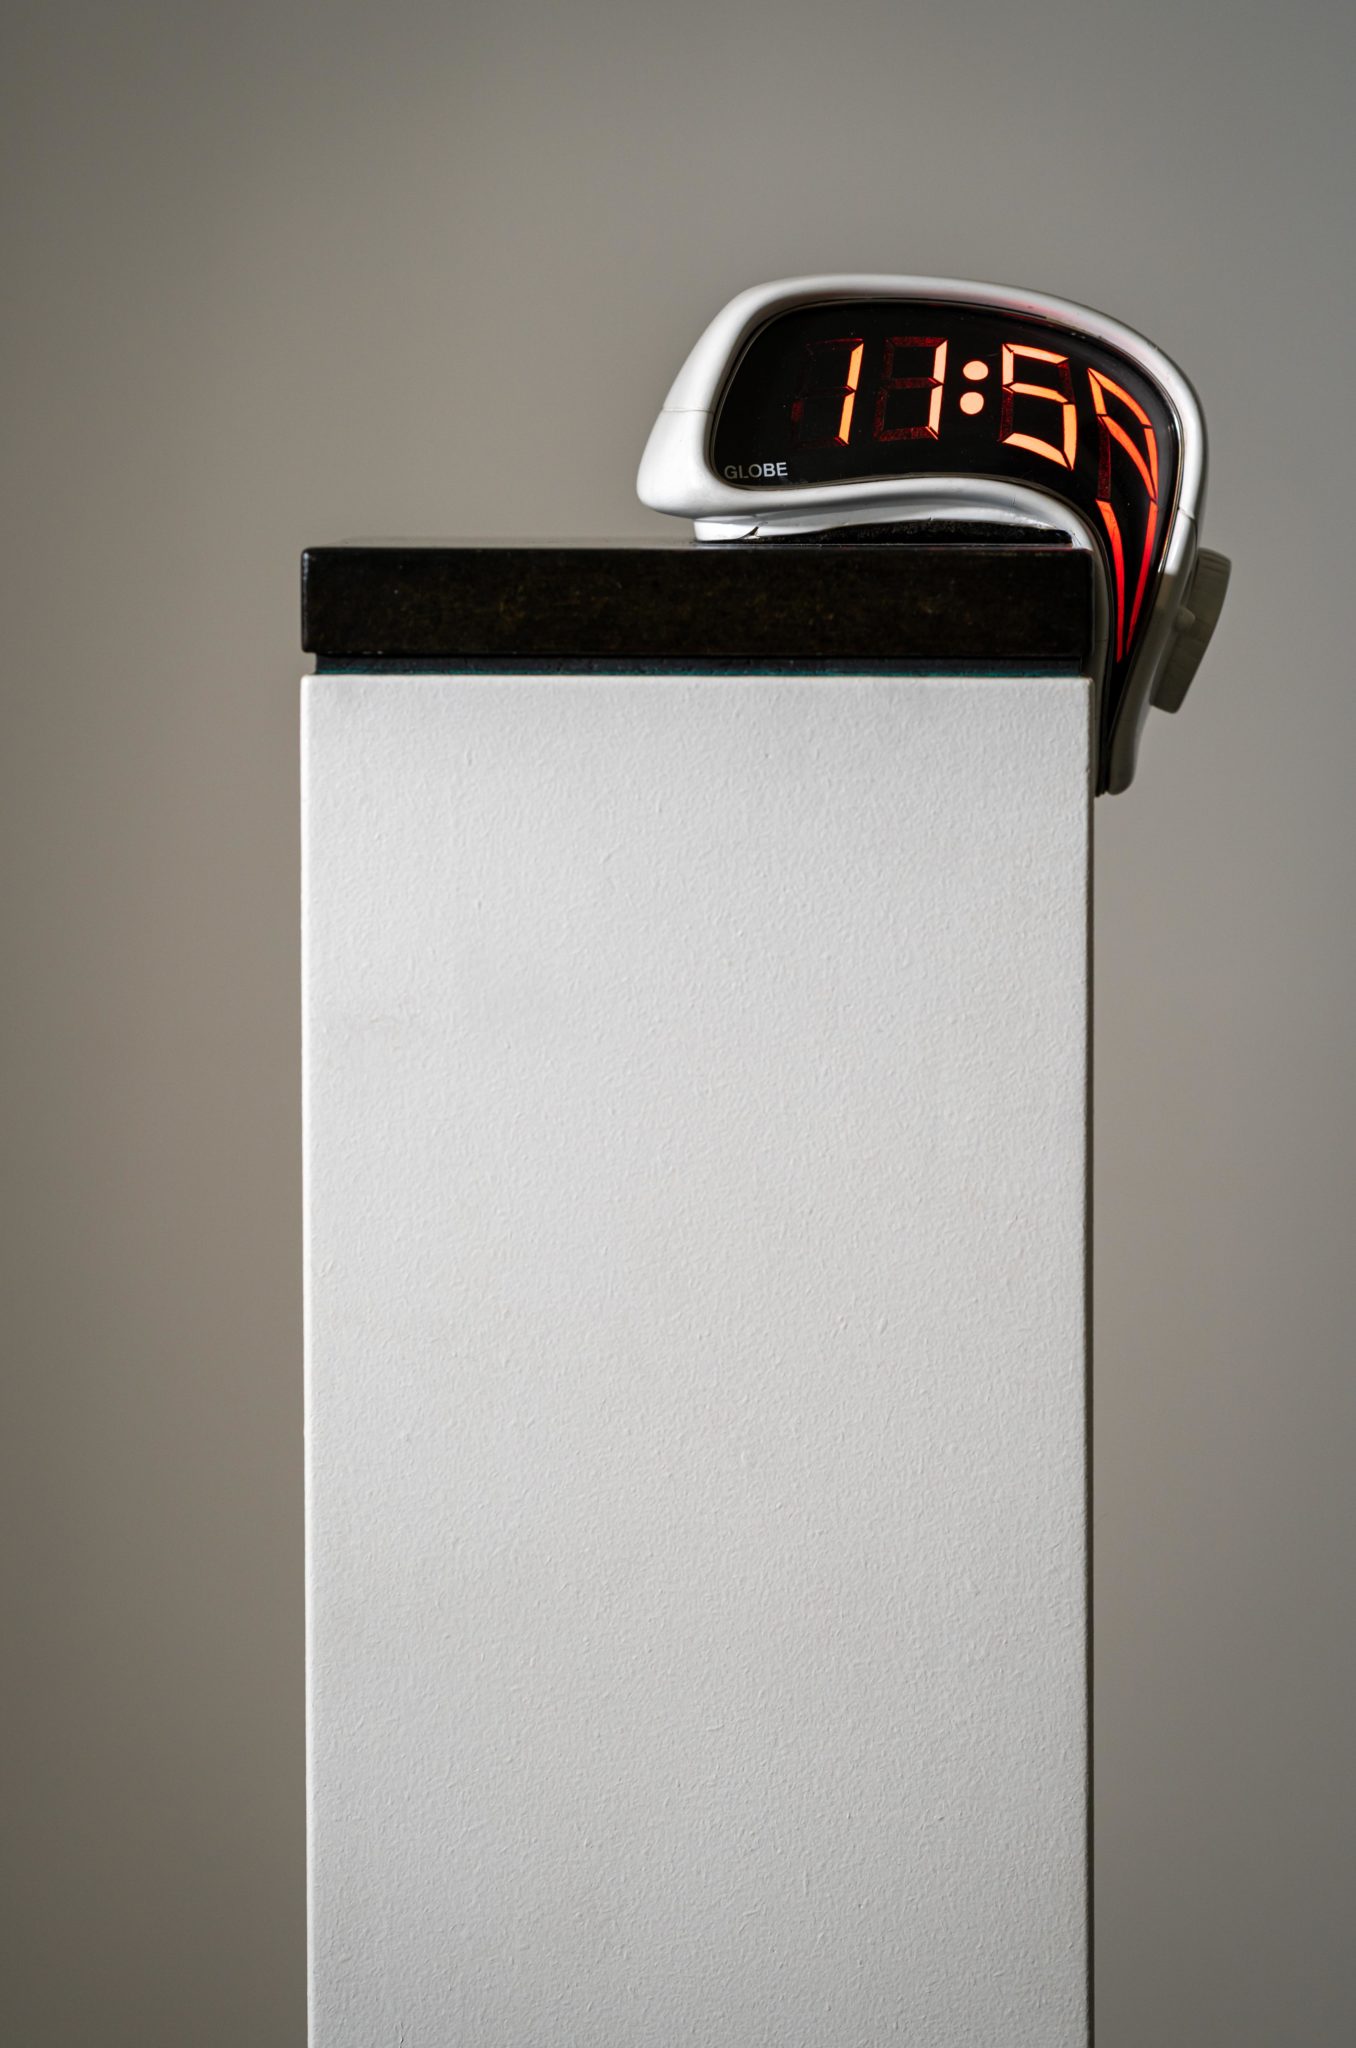 Colin Suggett, 11.59, 1998, Clock radio with base, 144 x 30 x 23 cm, Colin Suggett Collection, gift of the artist to Latrobe Regional Gallery, 2001.